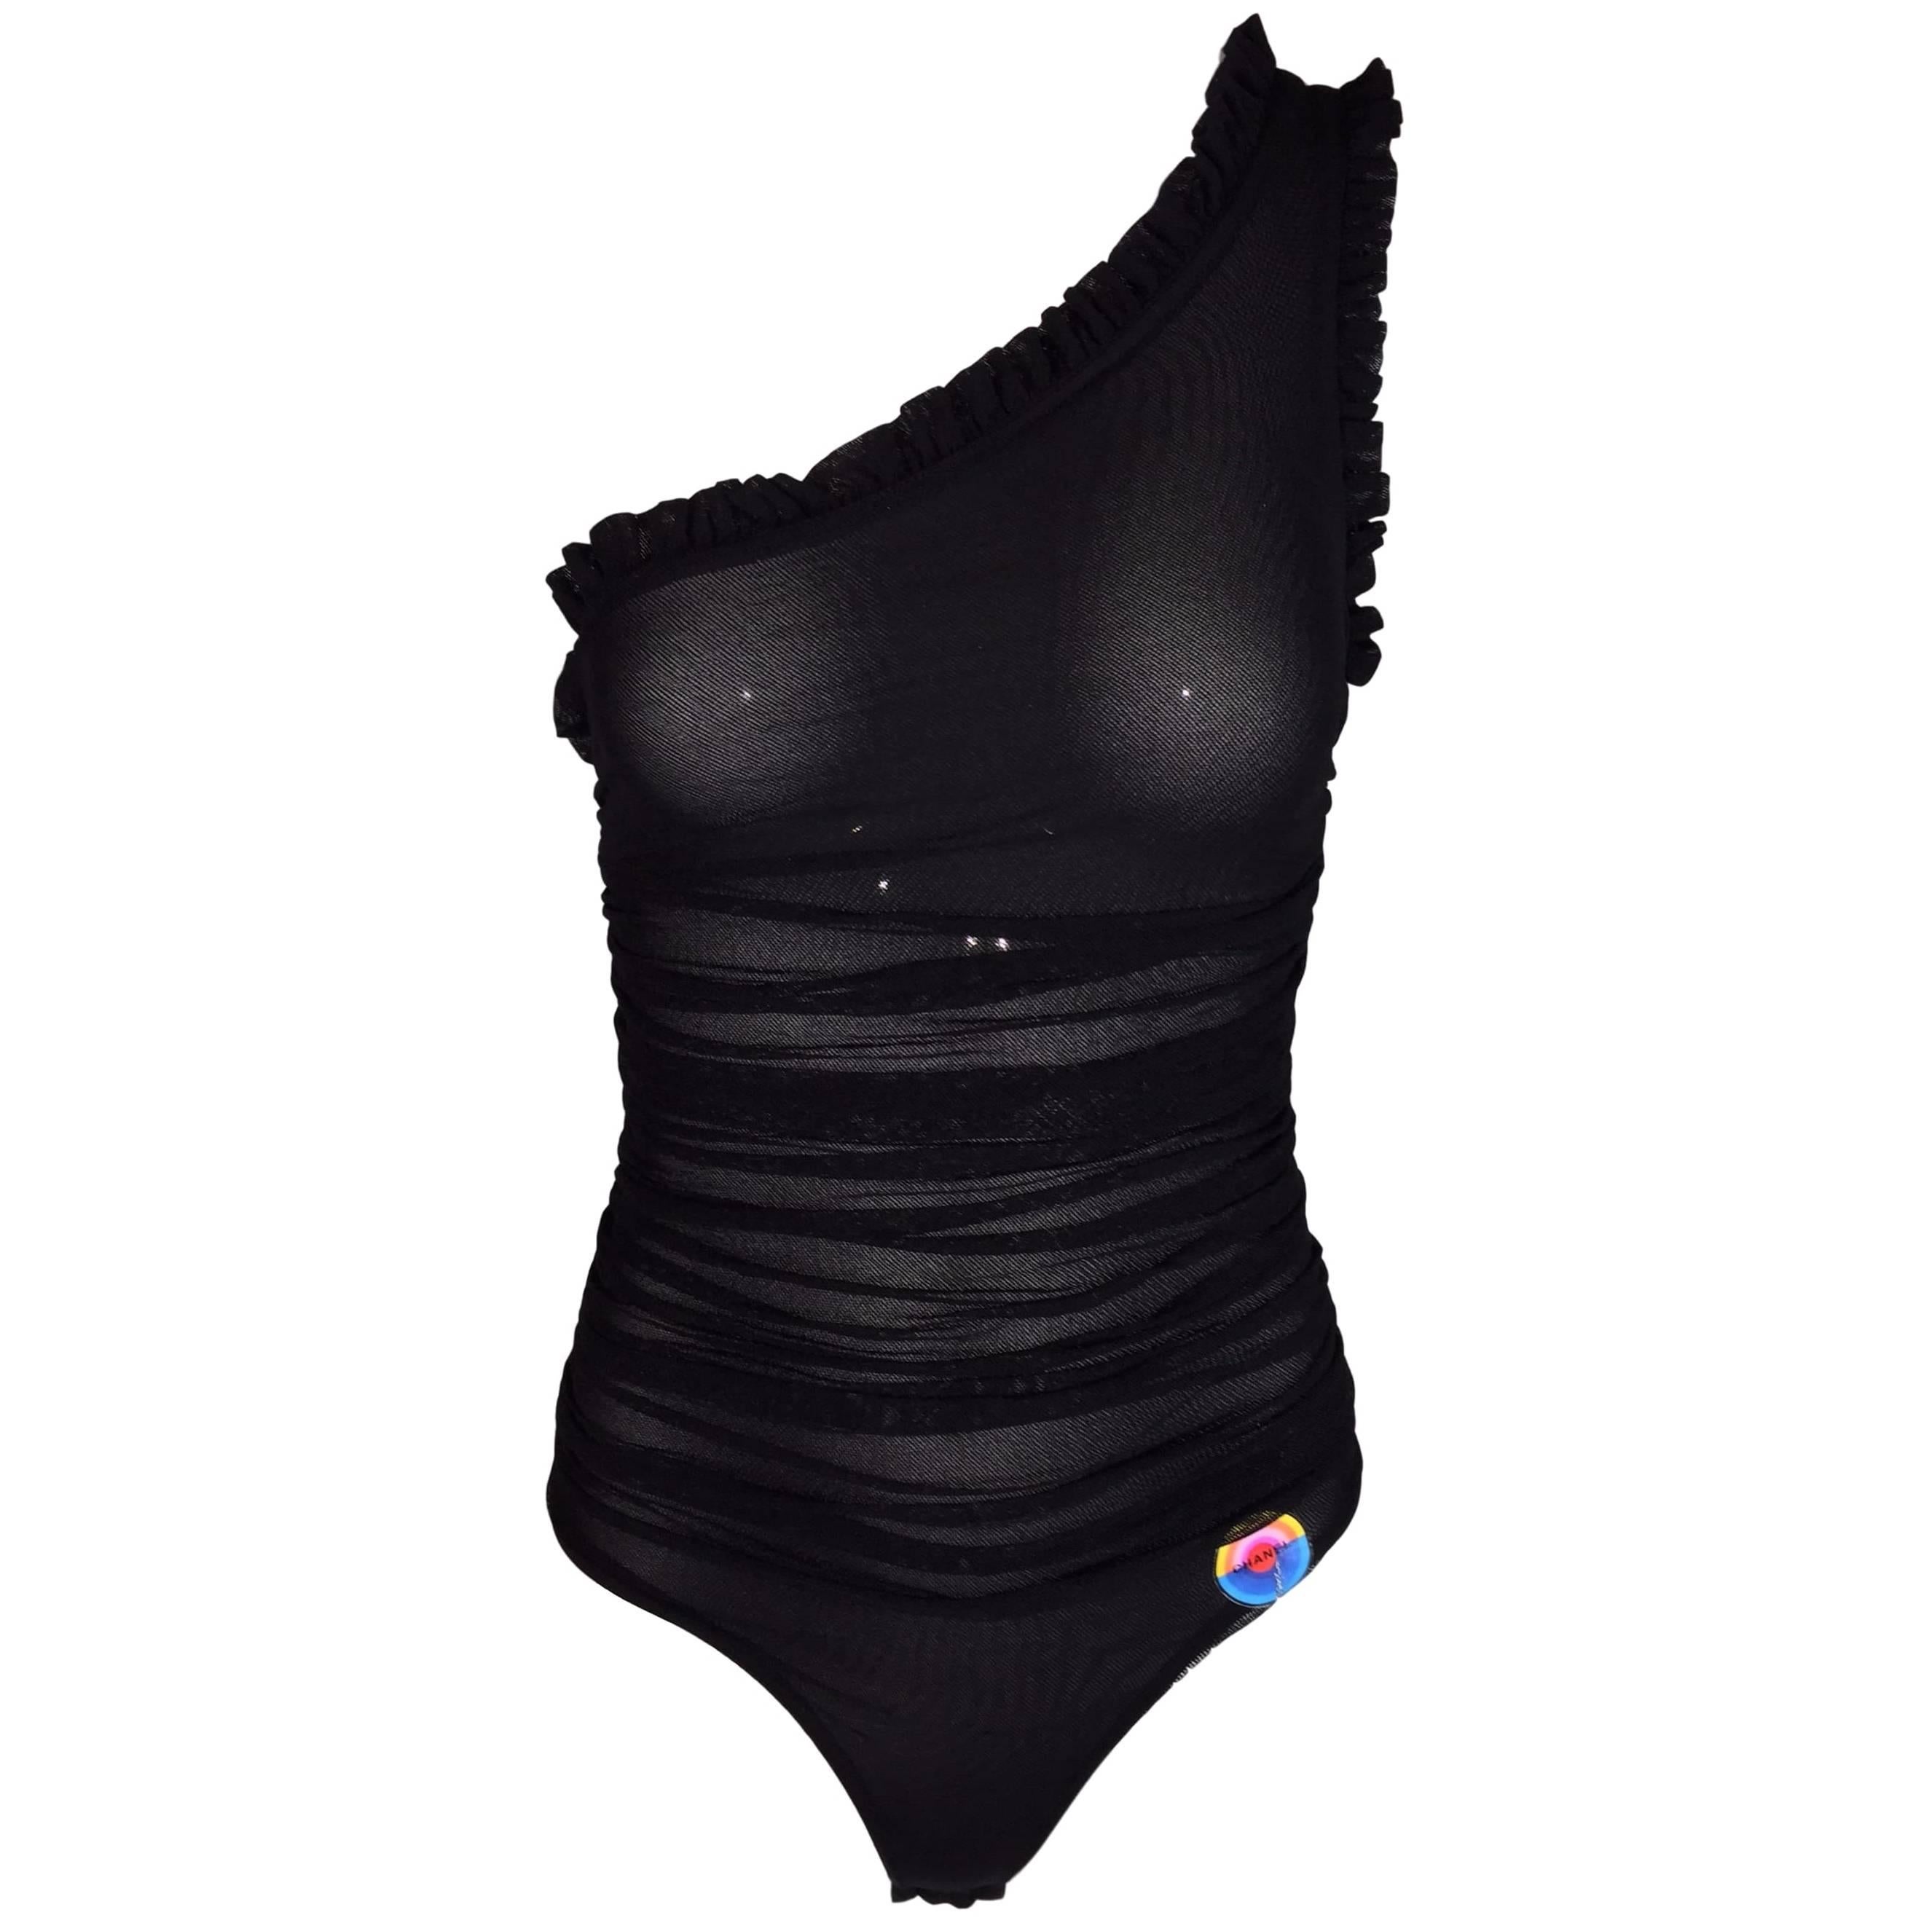 S/S 2001 Chanel Sheer Black Mesh One Shoulder Ruffle Swimsuit Bodysuit Top